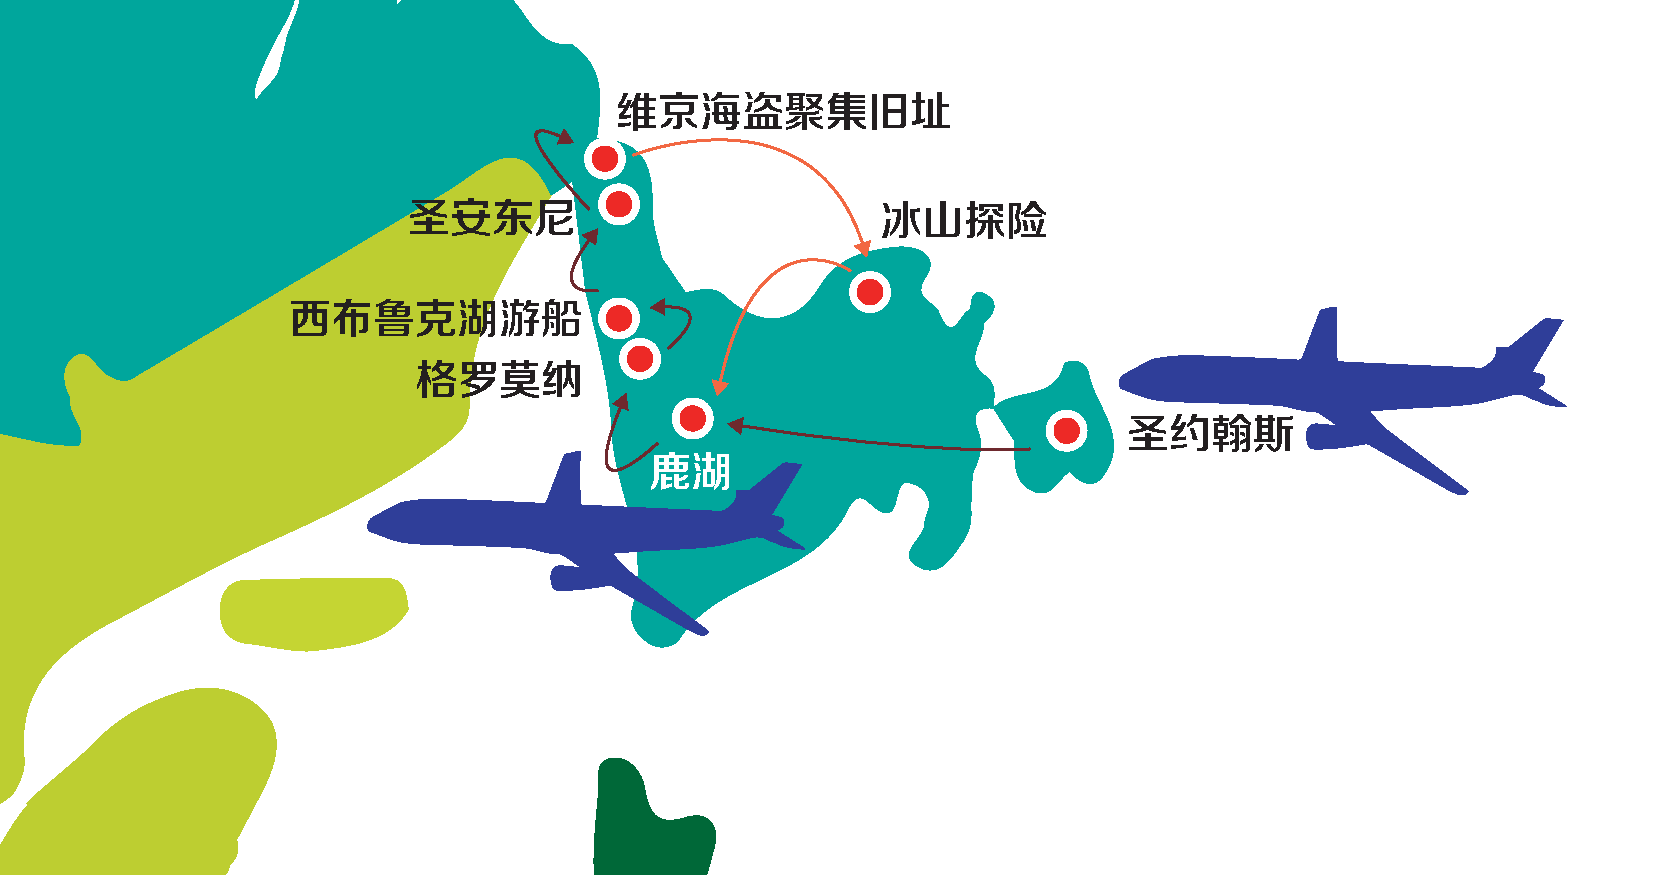 halifax to toronto map